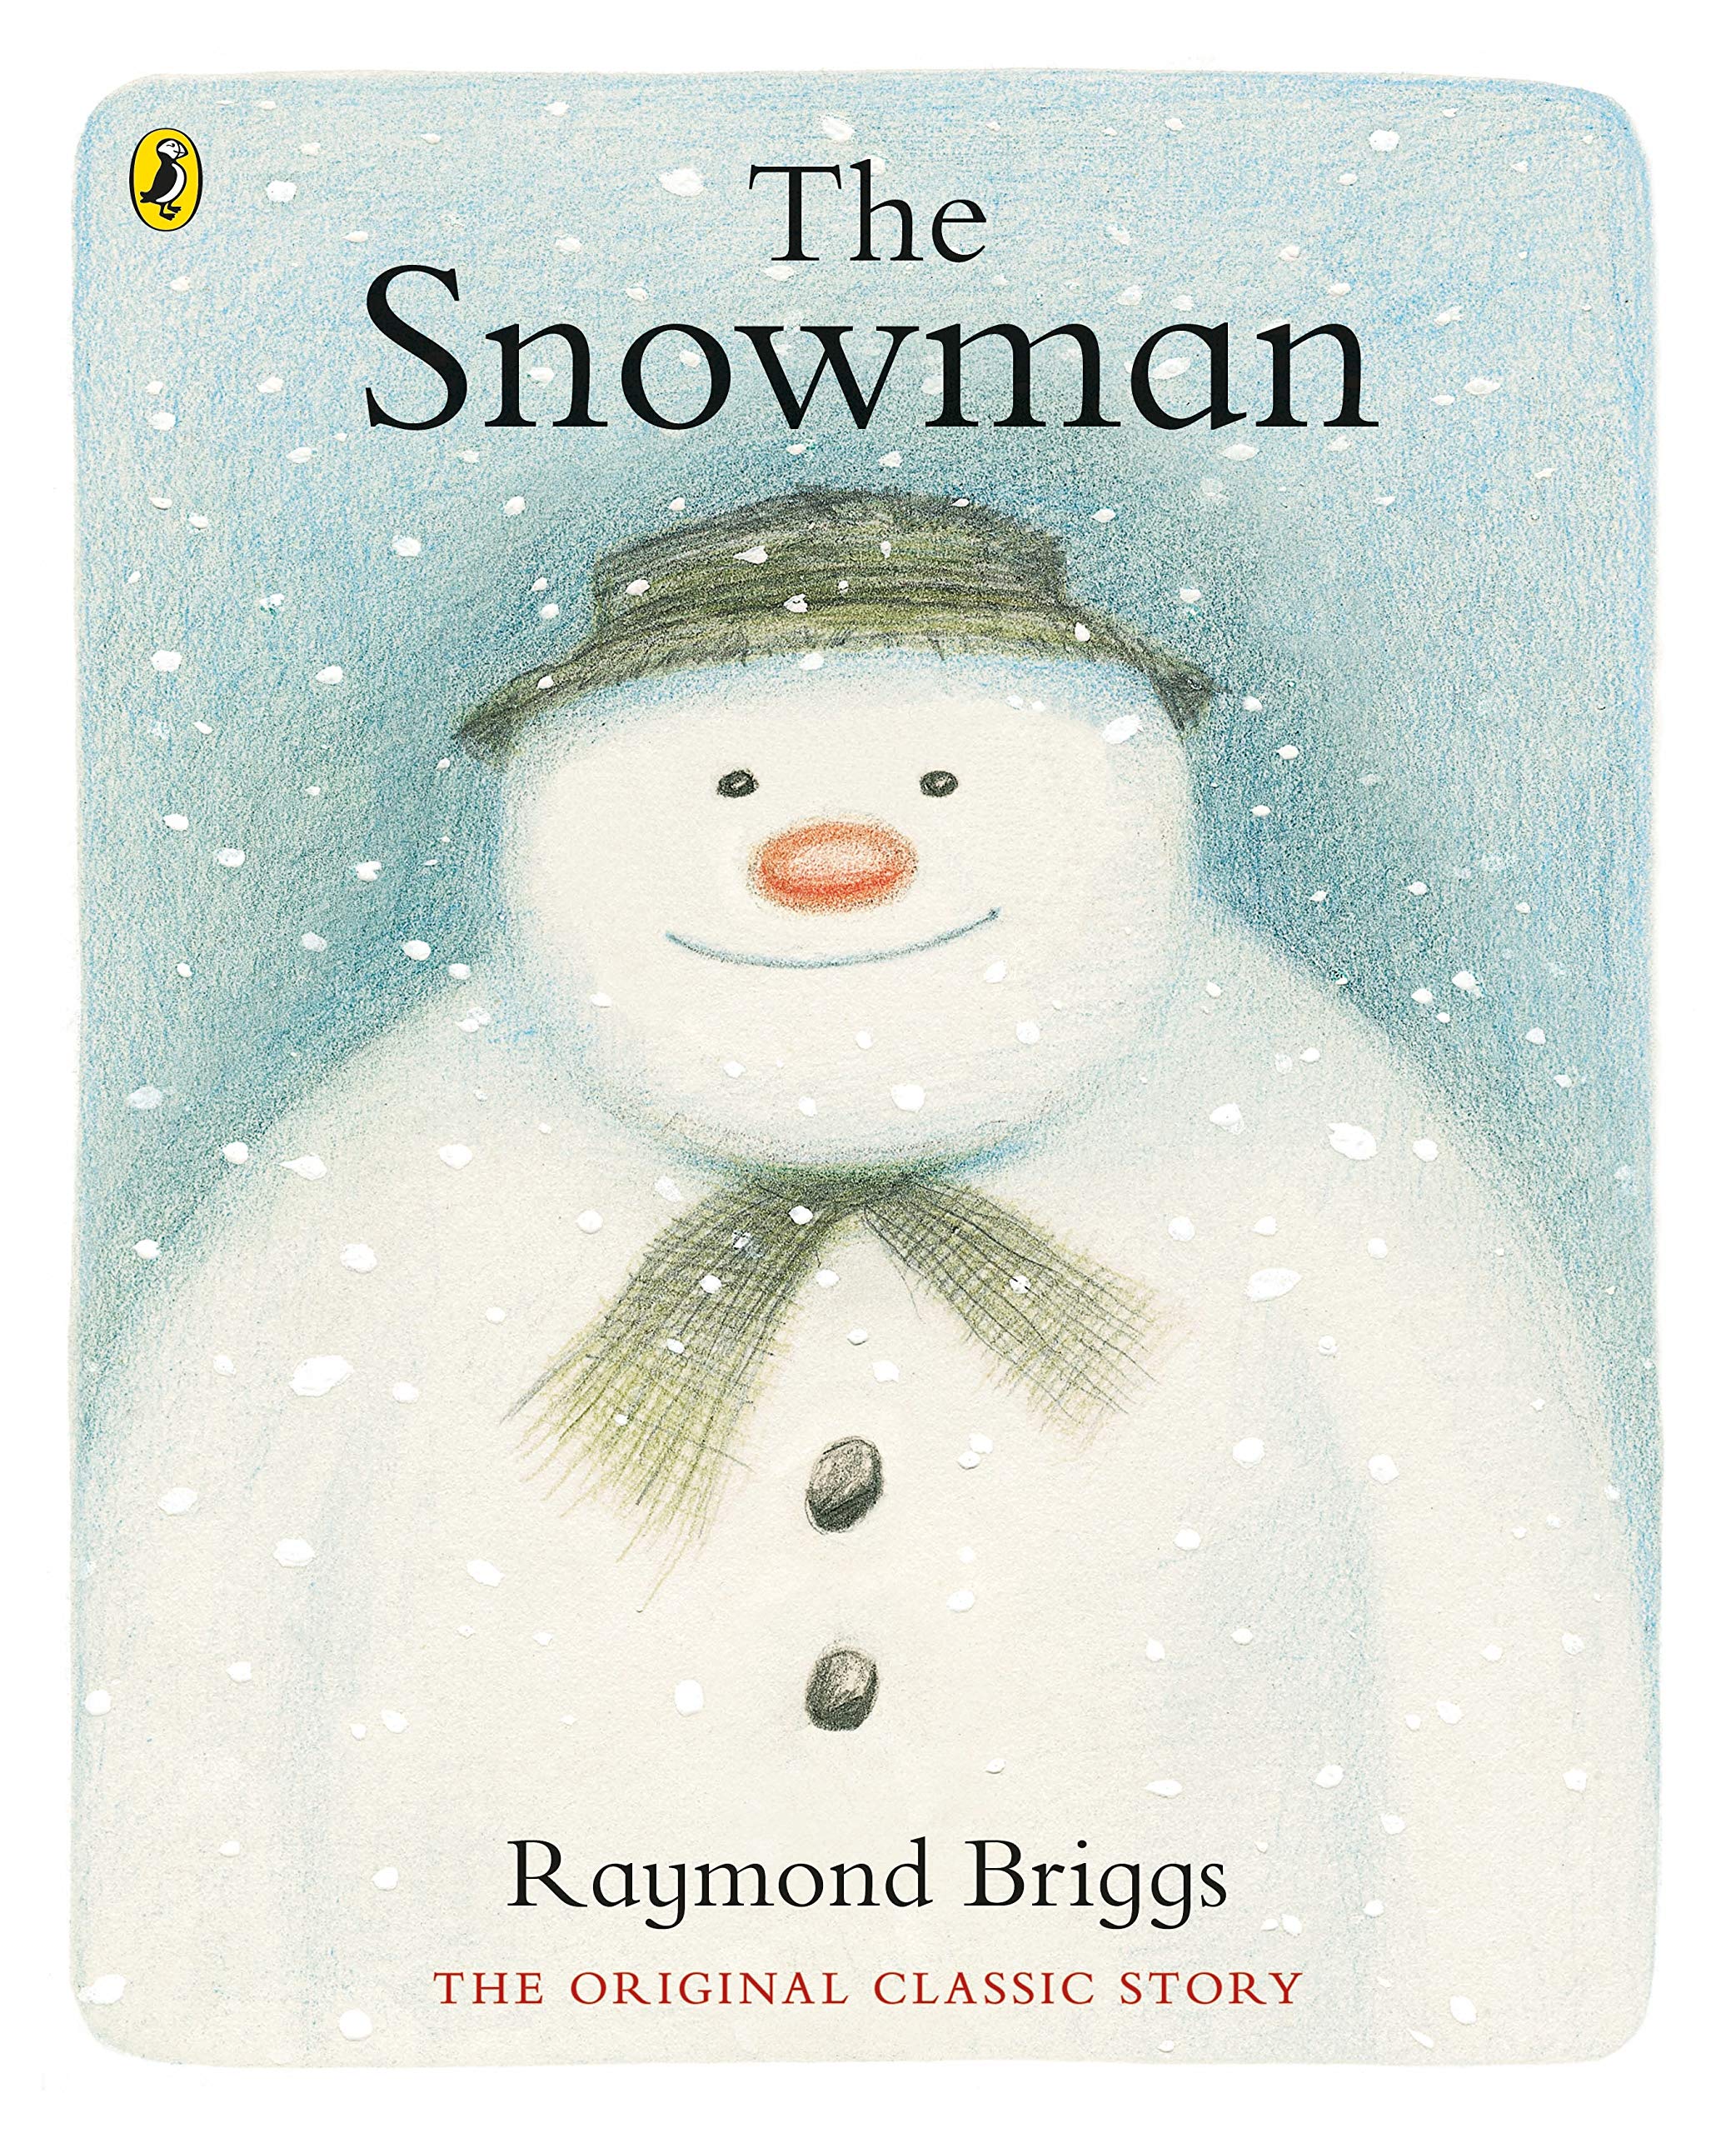 The Snowman by Raymond Briggs